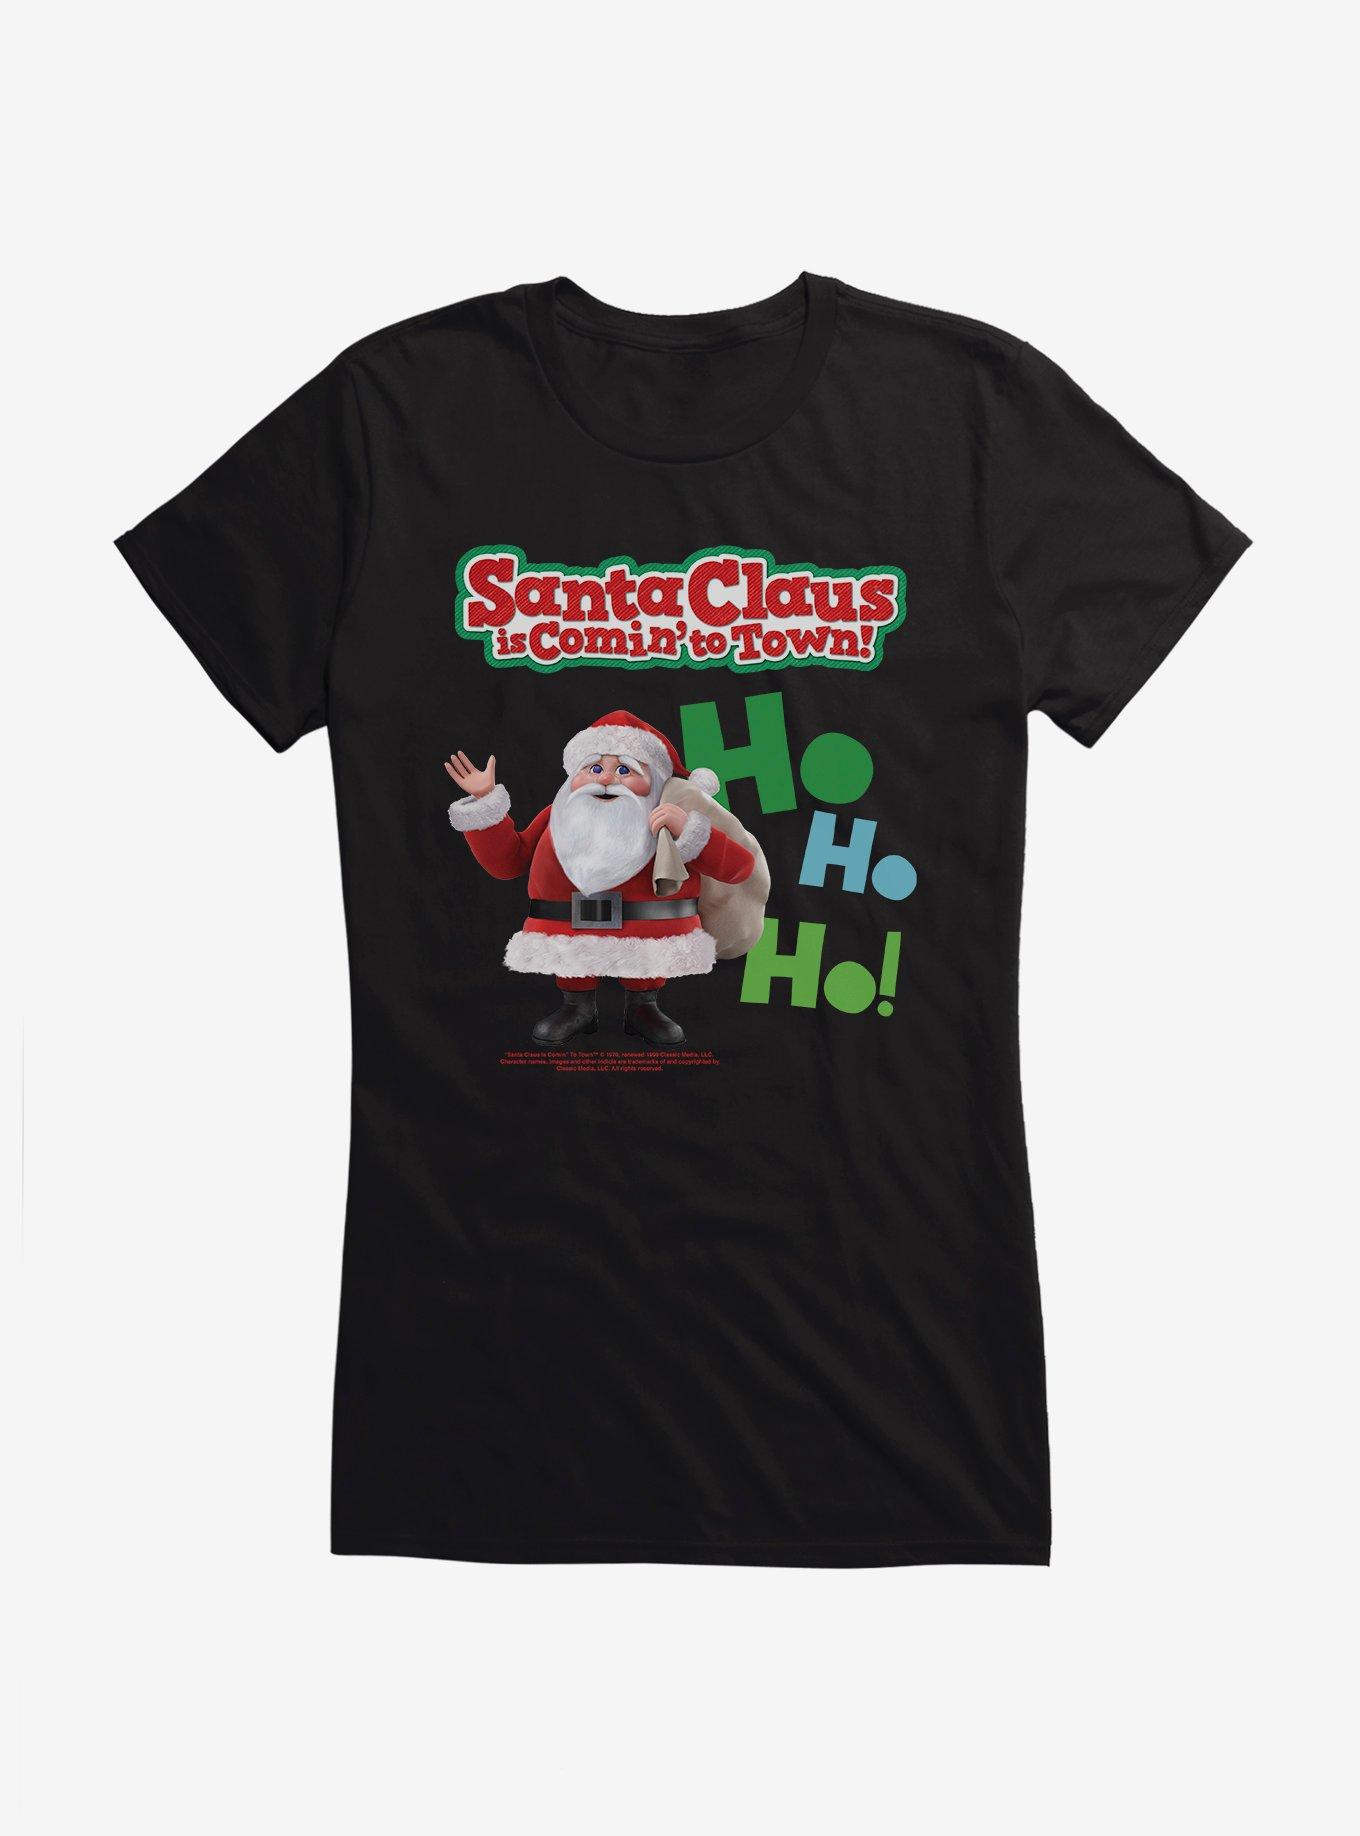 Santa Claus Is Comin' To Town! Ho Ho! Girls T-Shirt